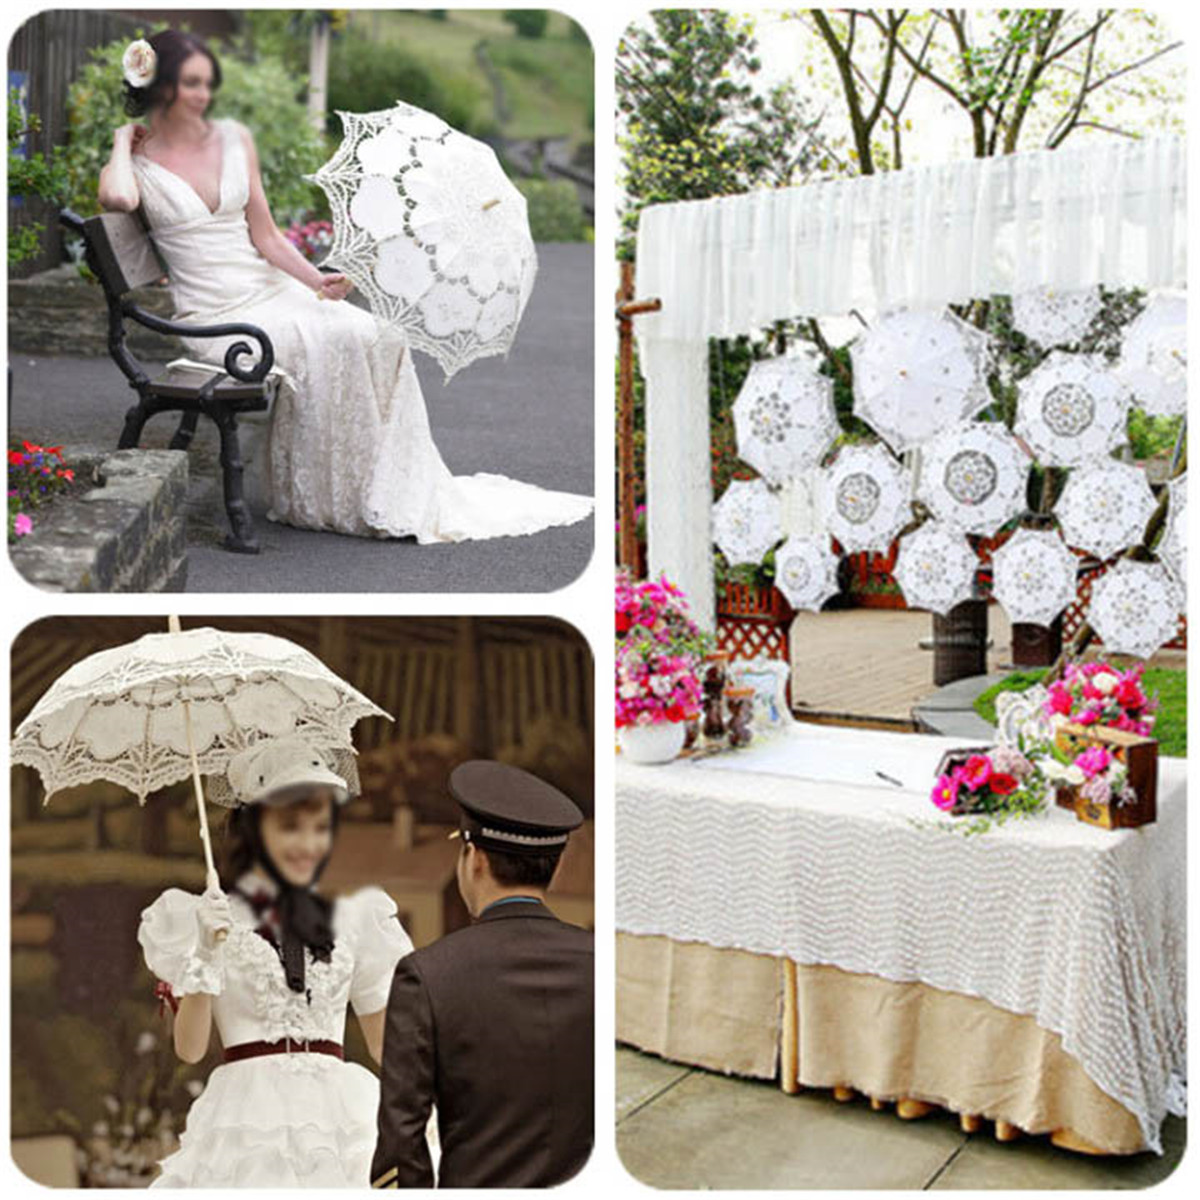 White-Accessory-Umbrella-Gorgeous-Lace-Girls-Wedding-Party-Decor-1361217